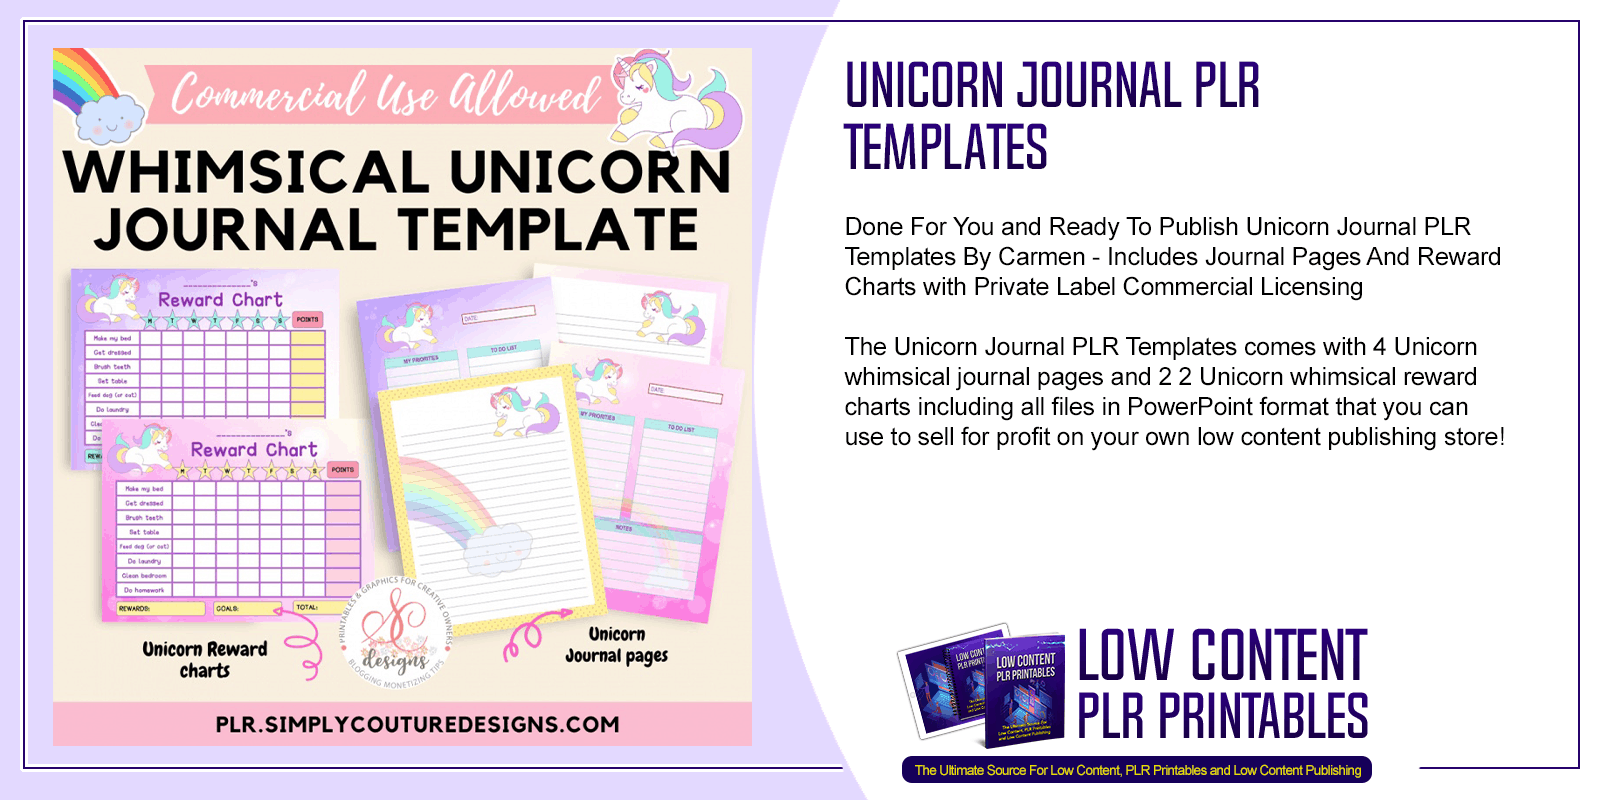 Unicorn Journal PLR Templates